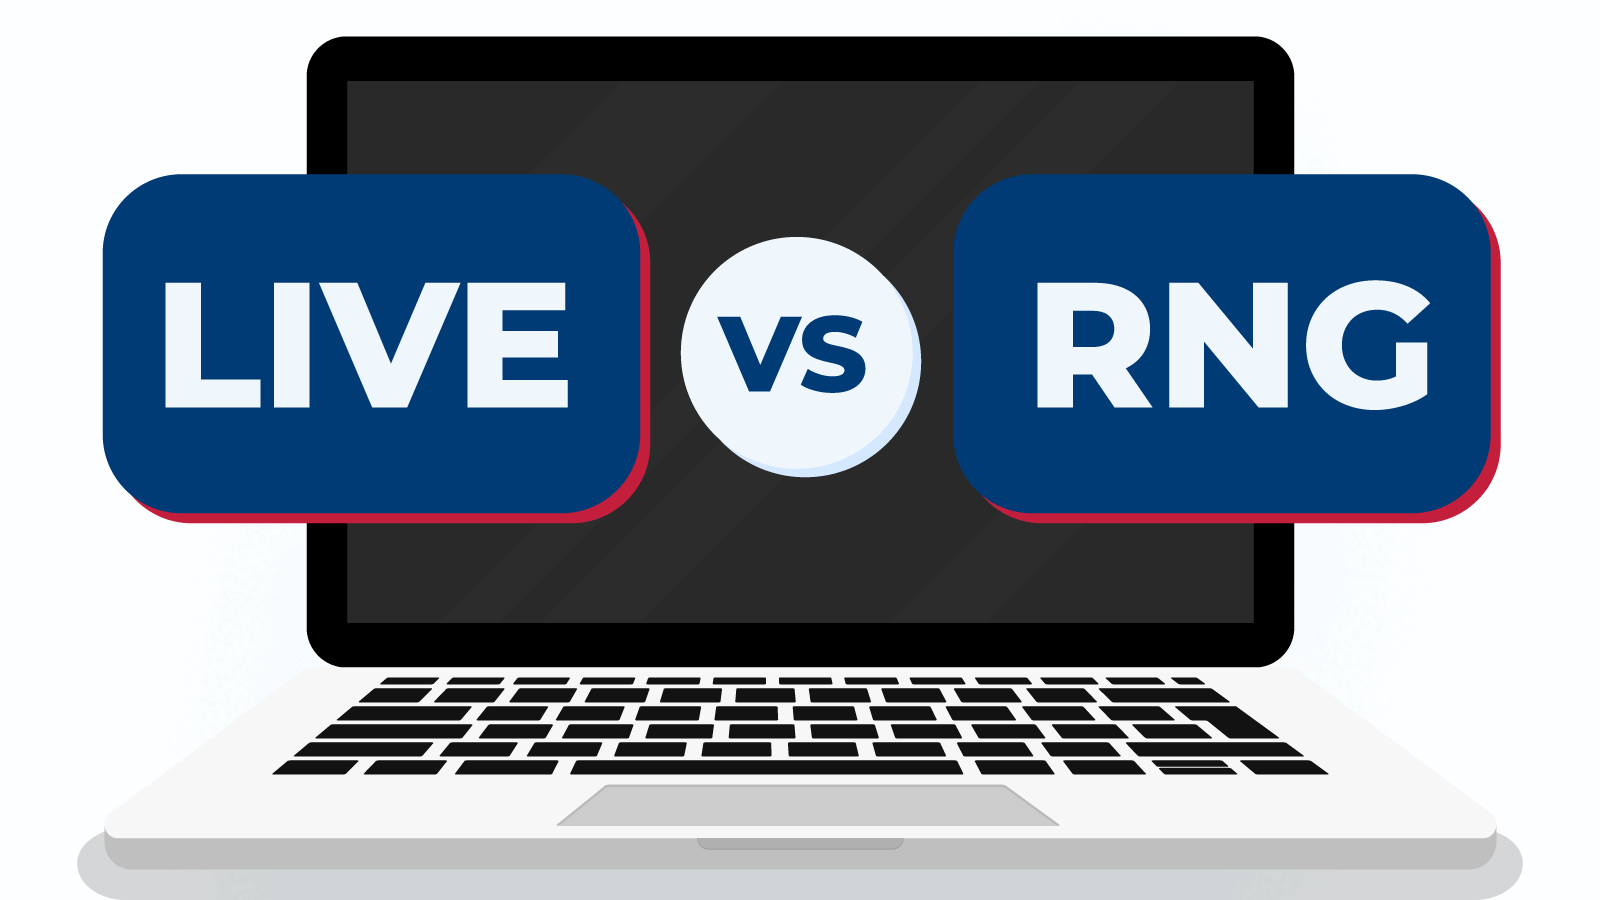 Live vs RNG (virtual table) games